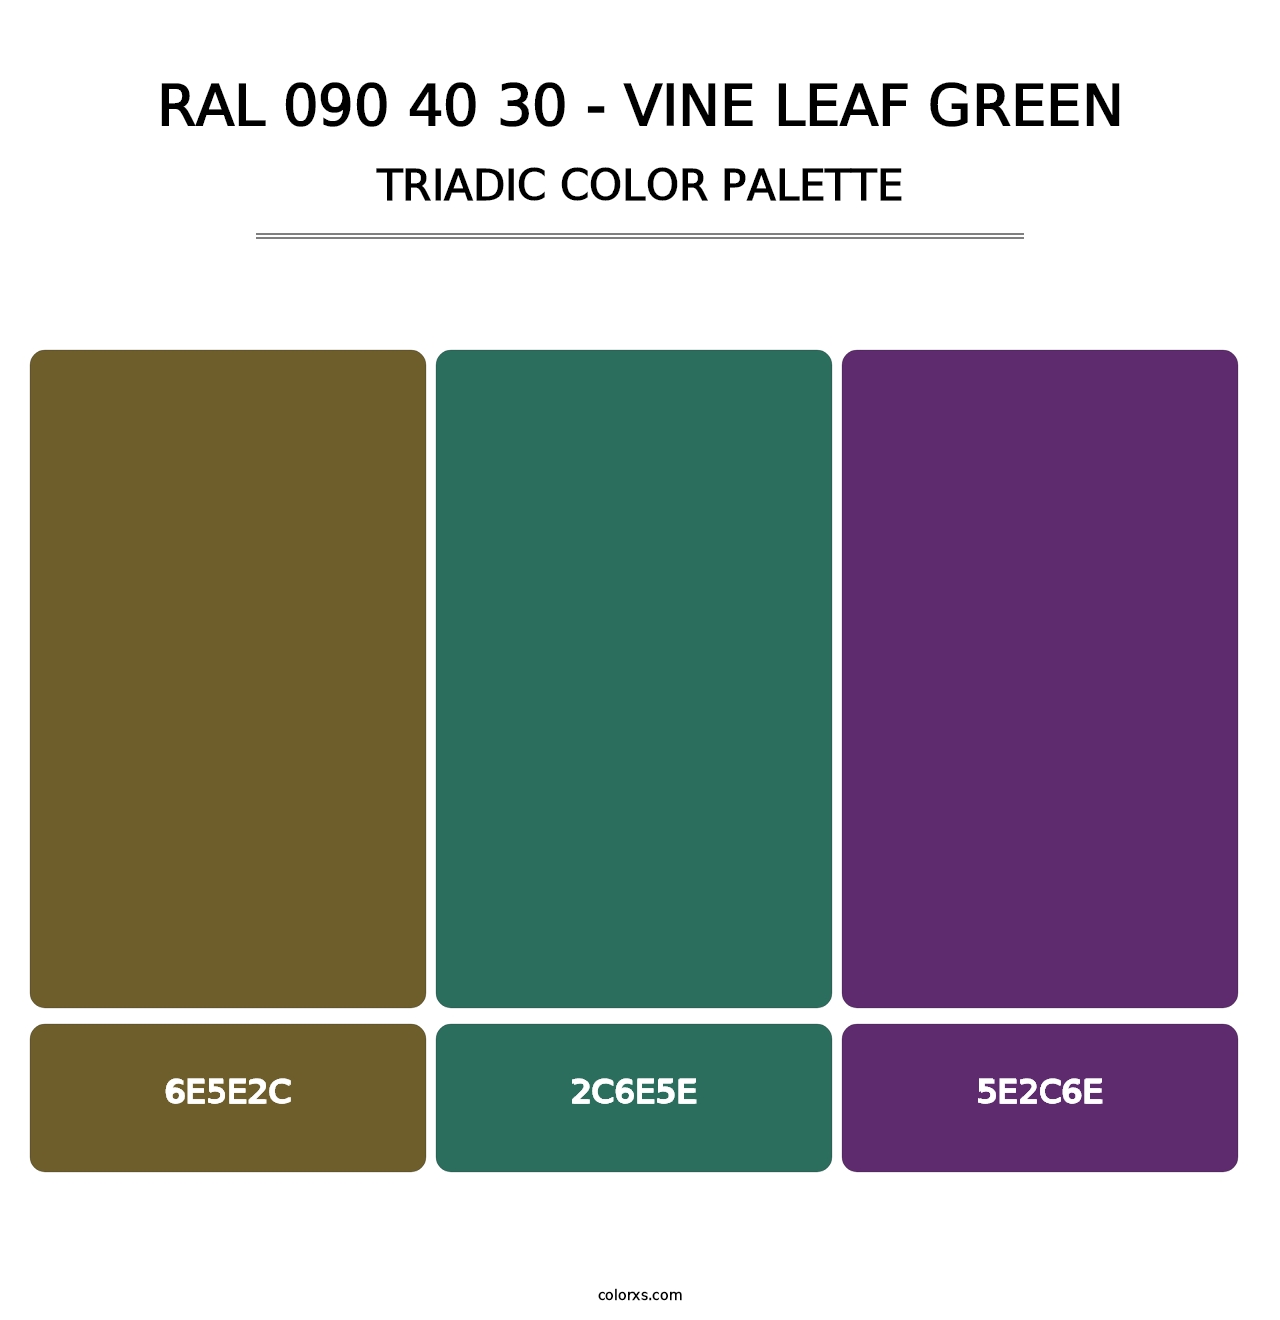 RAL 090 40 30 - Vine Leaf Green - Triadic Color Palette